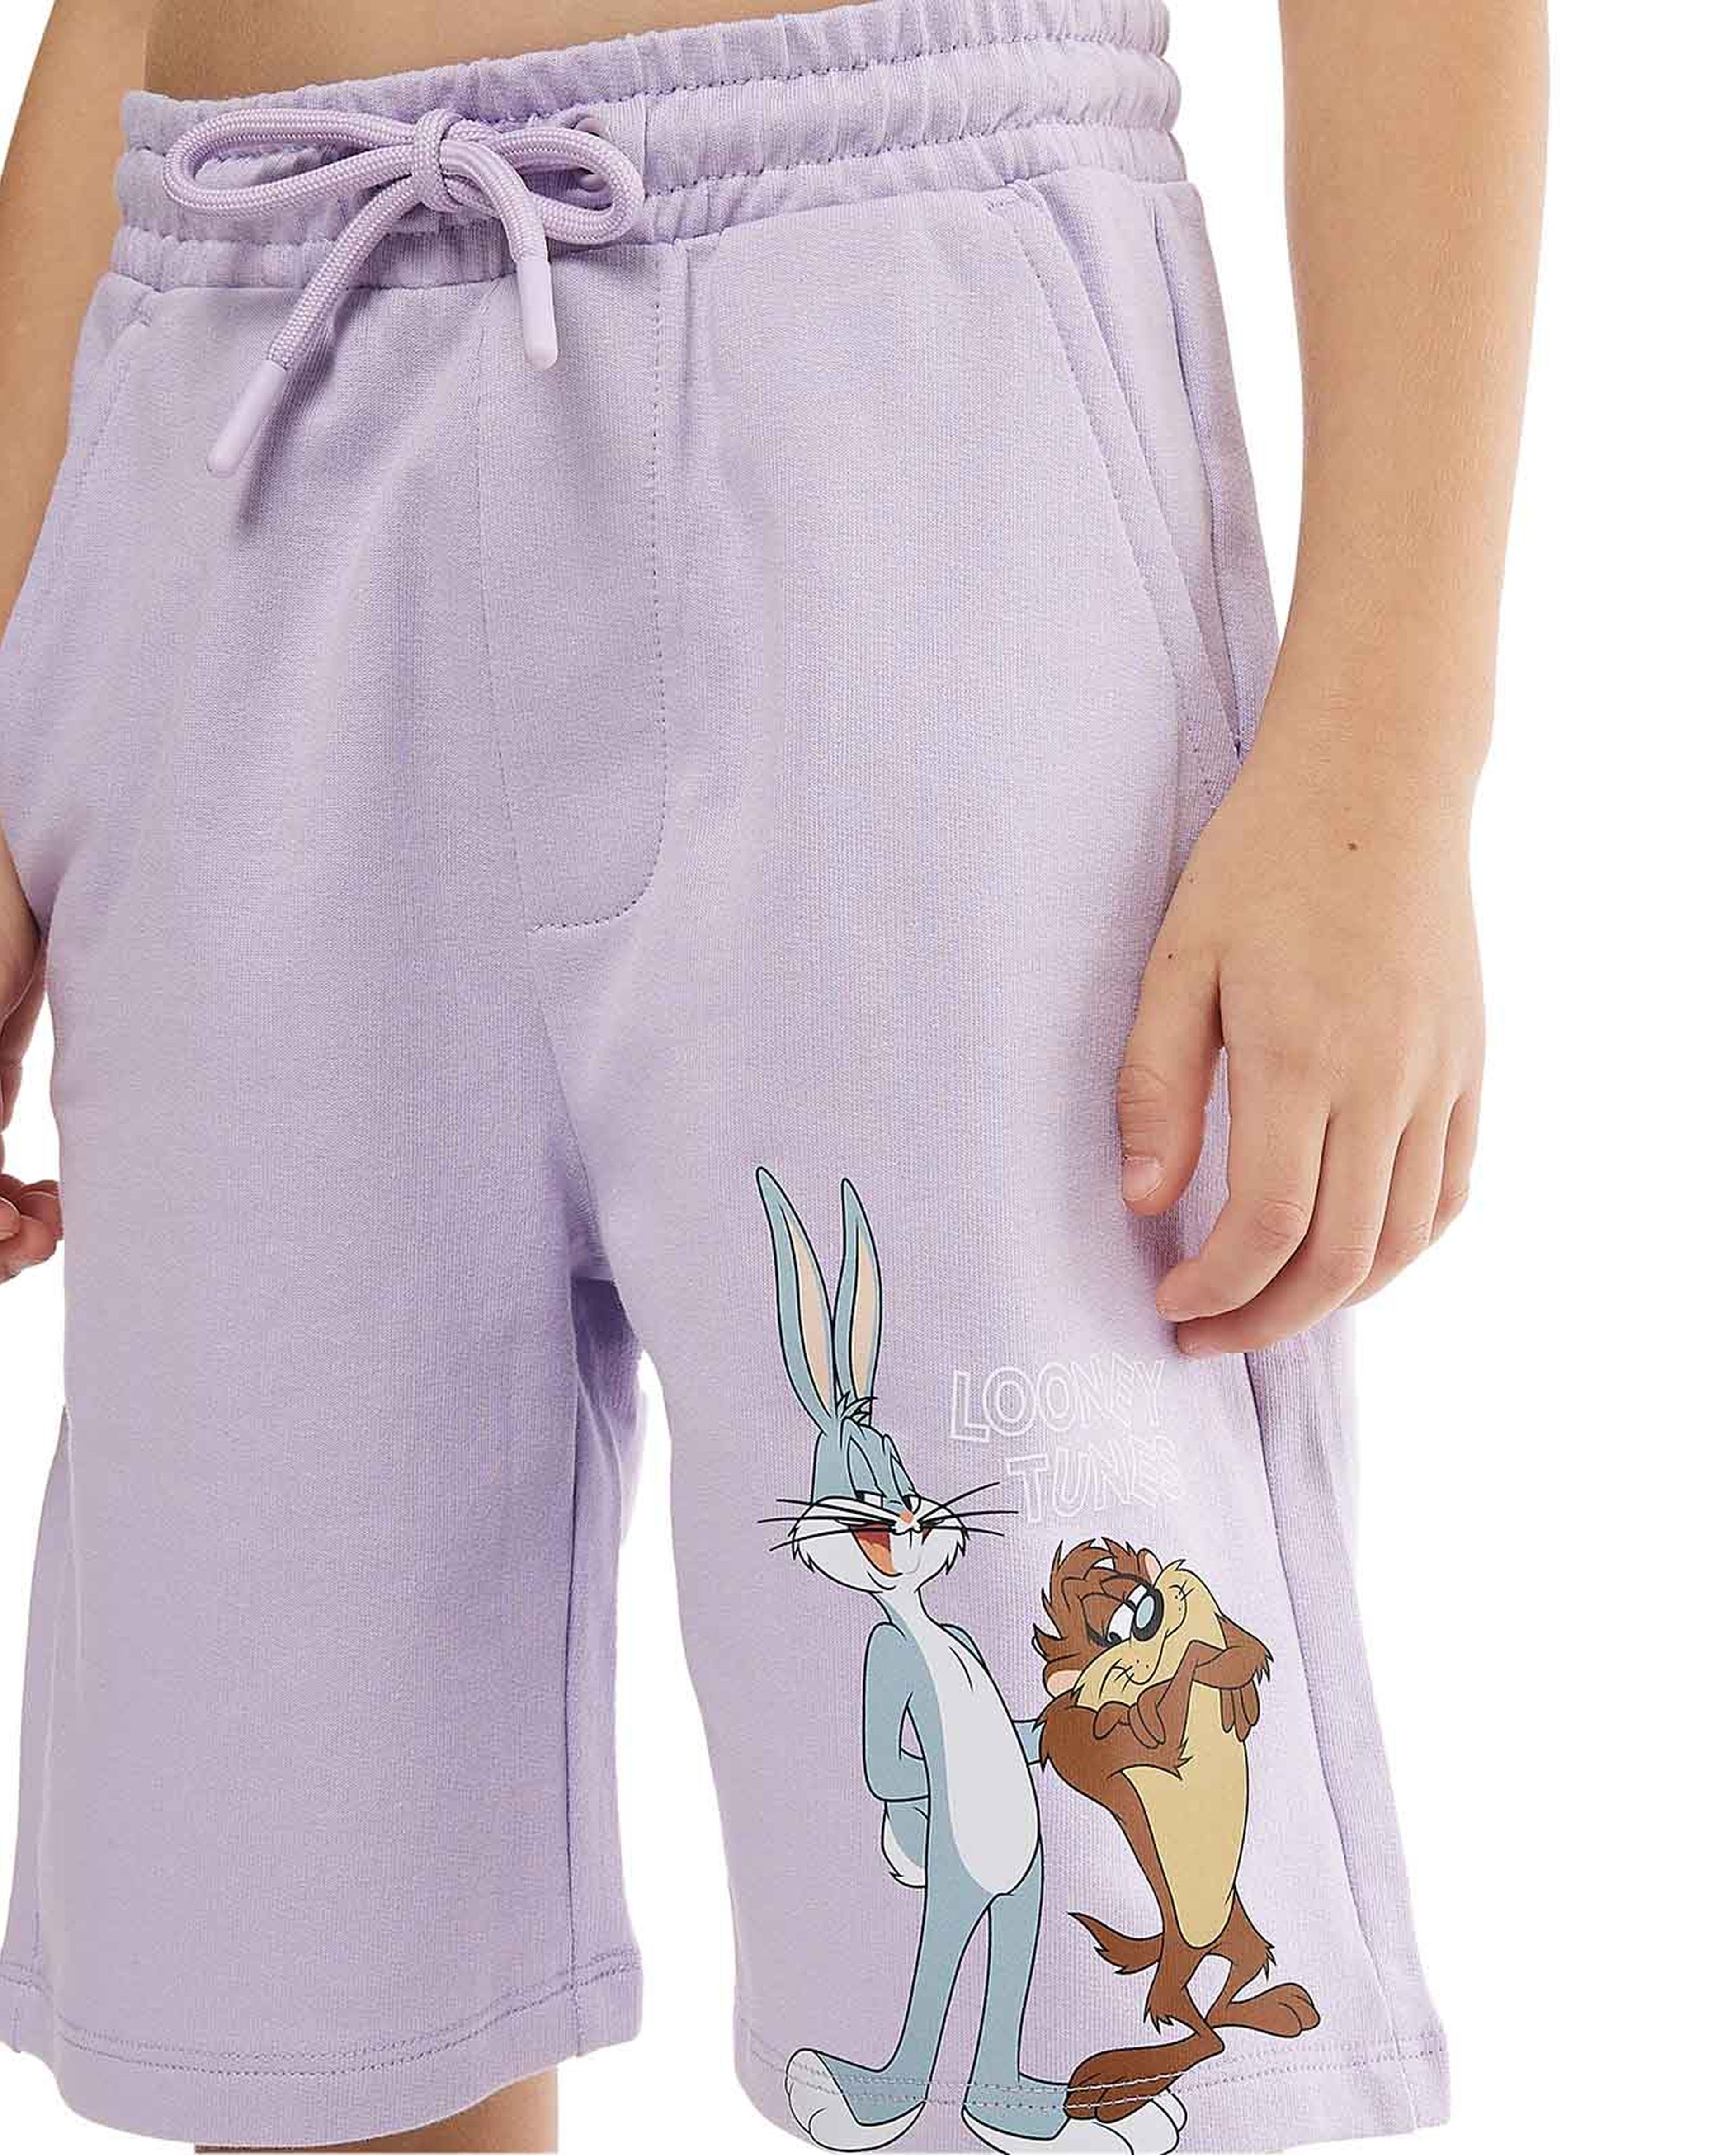 Looney Tunes Printed Clothing Set